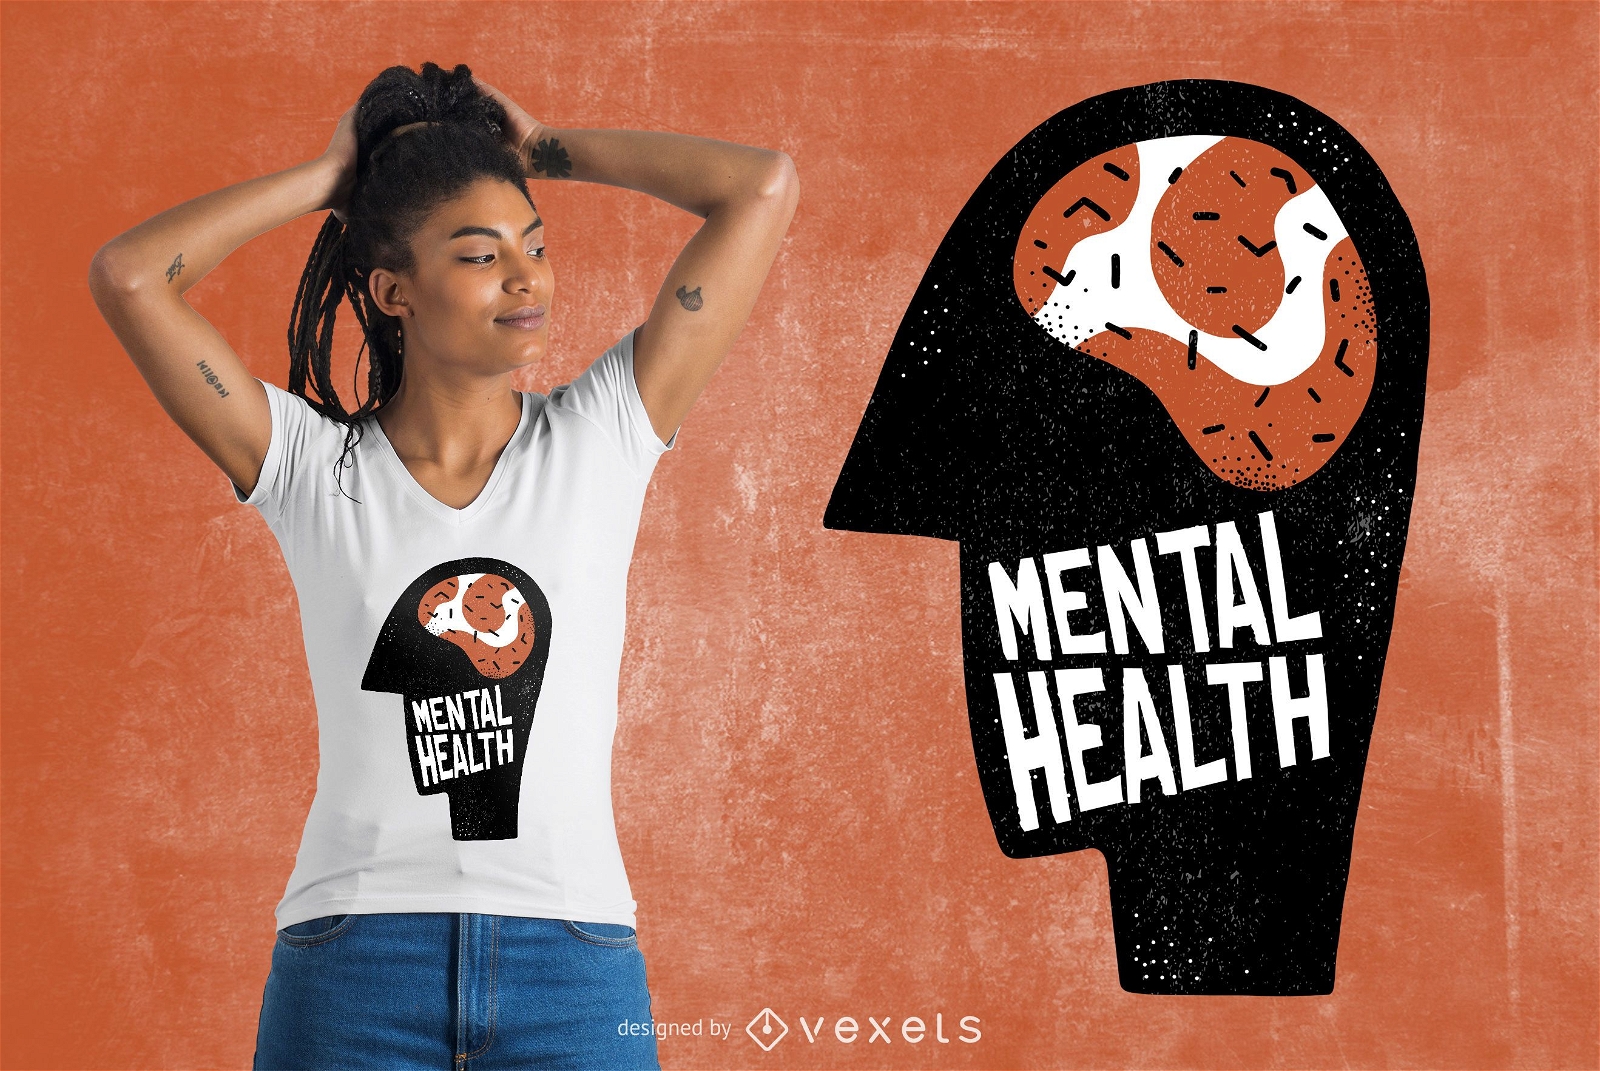 Mental health t-shirt design